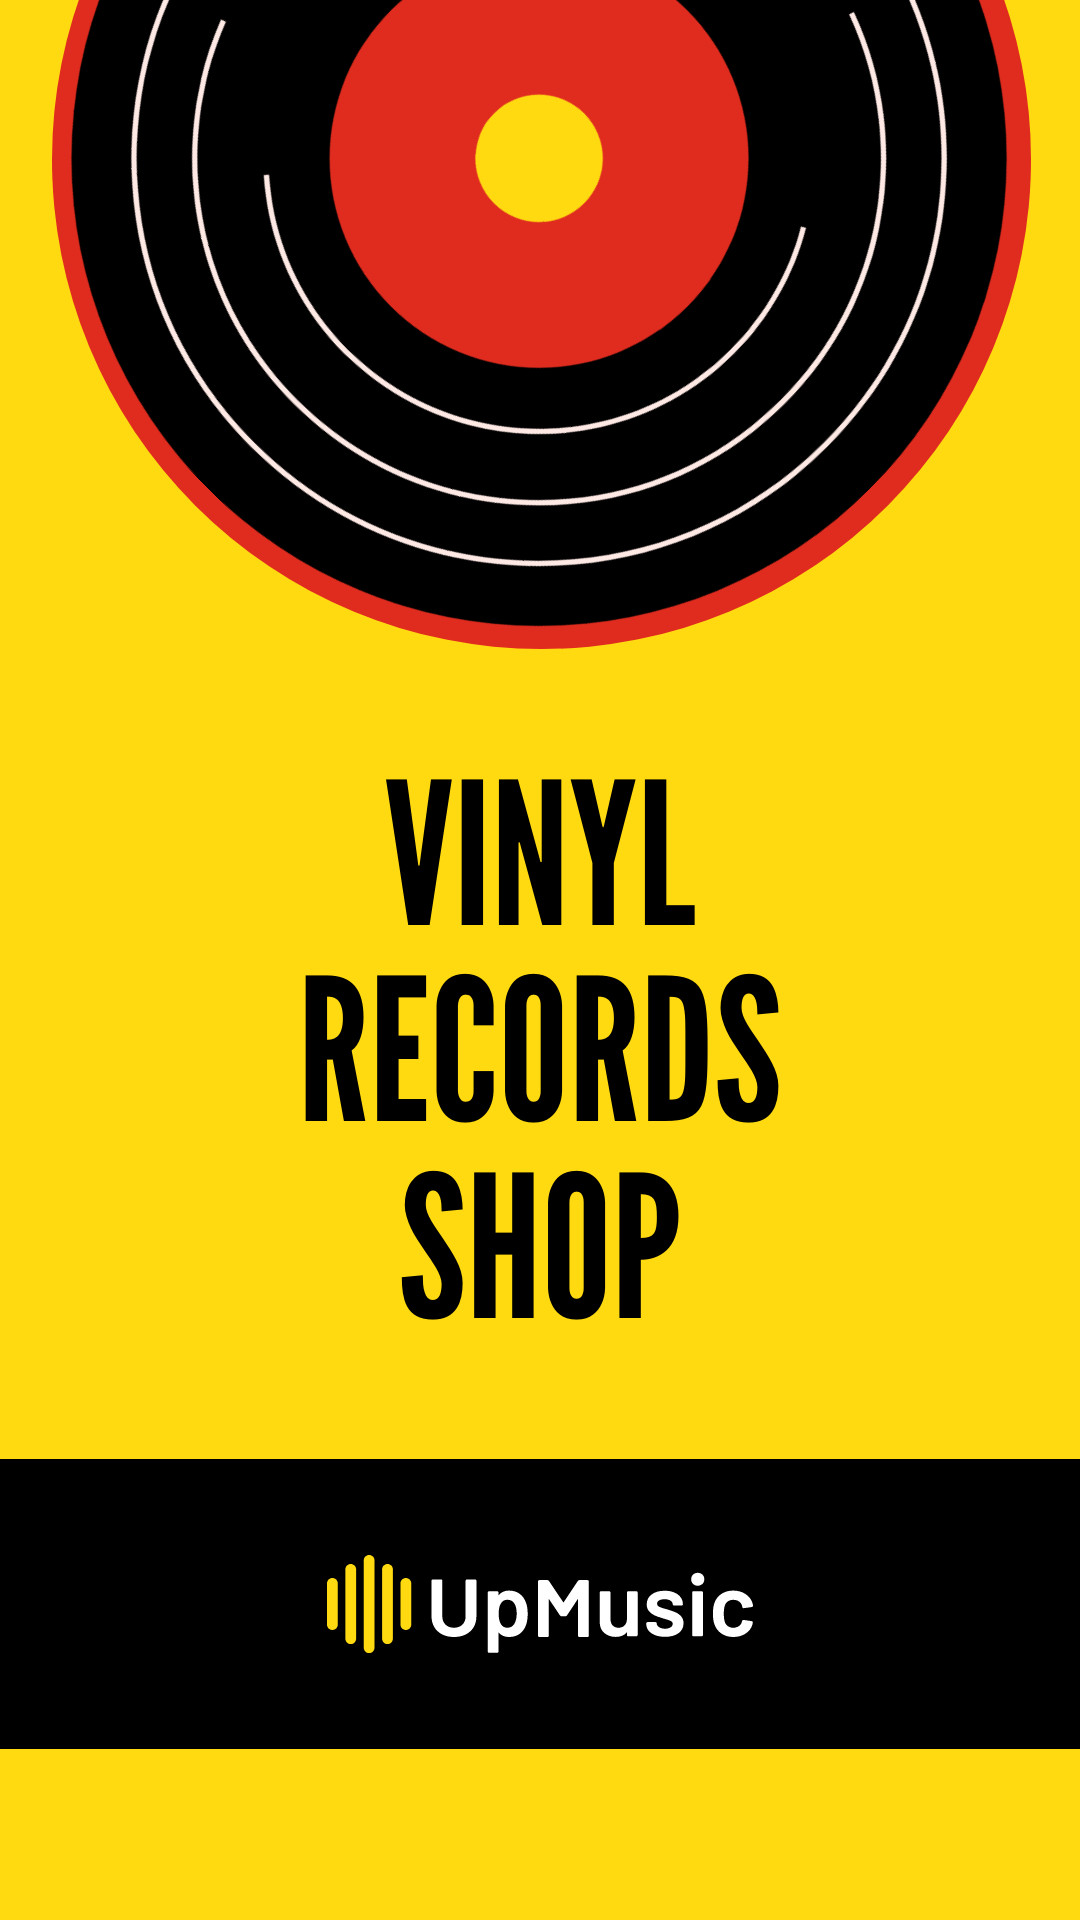 Vinyl Records Music Shop  Inline Rectangle 300x250